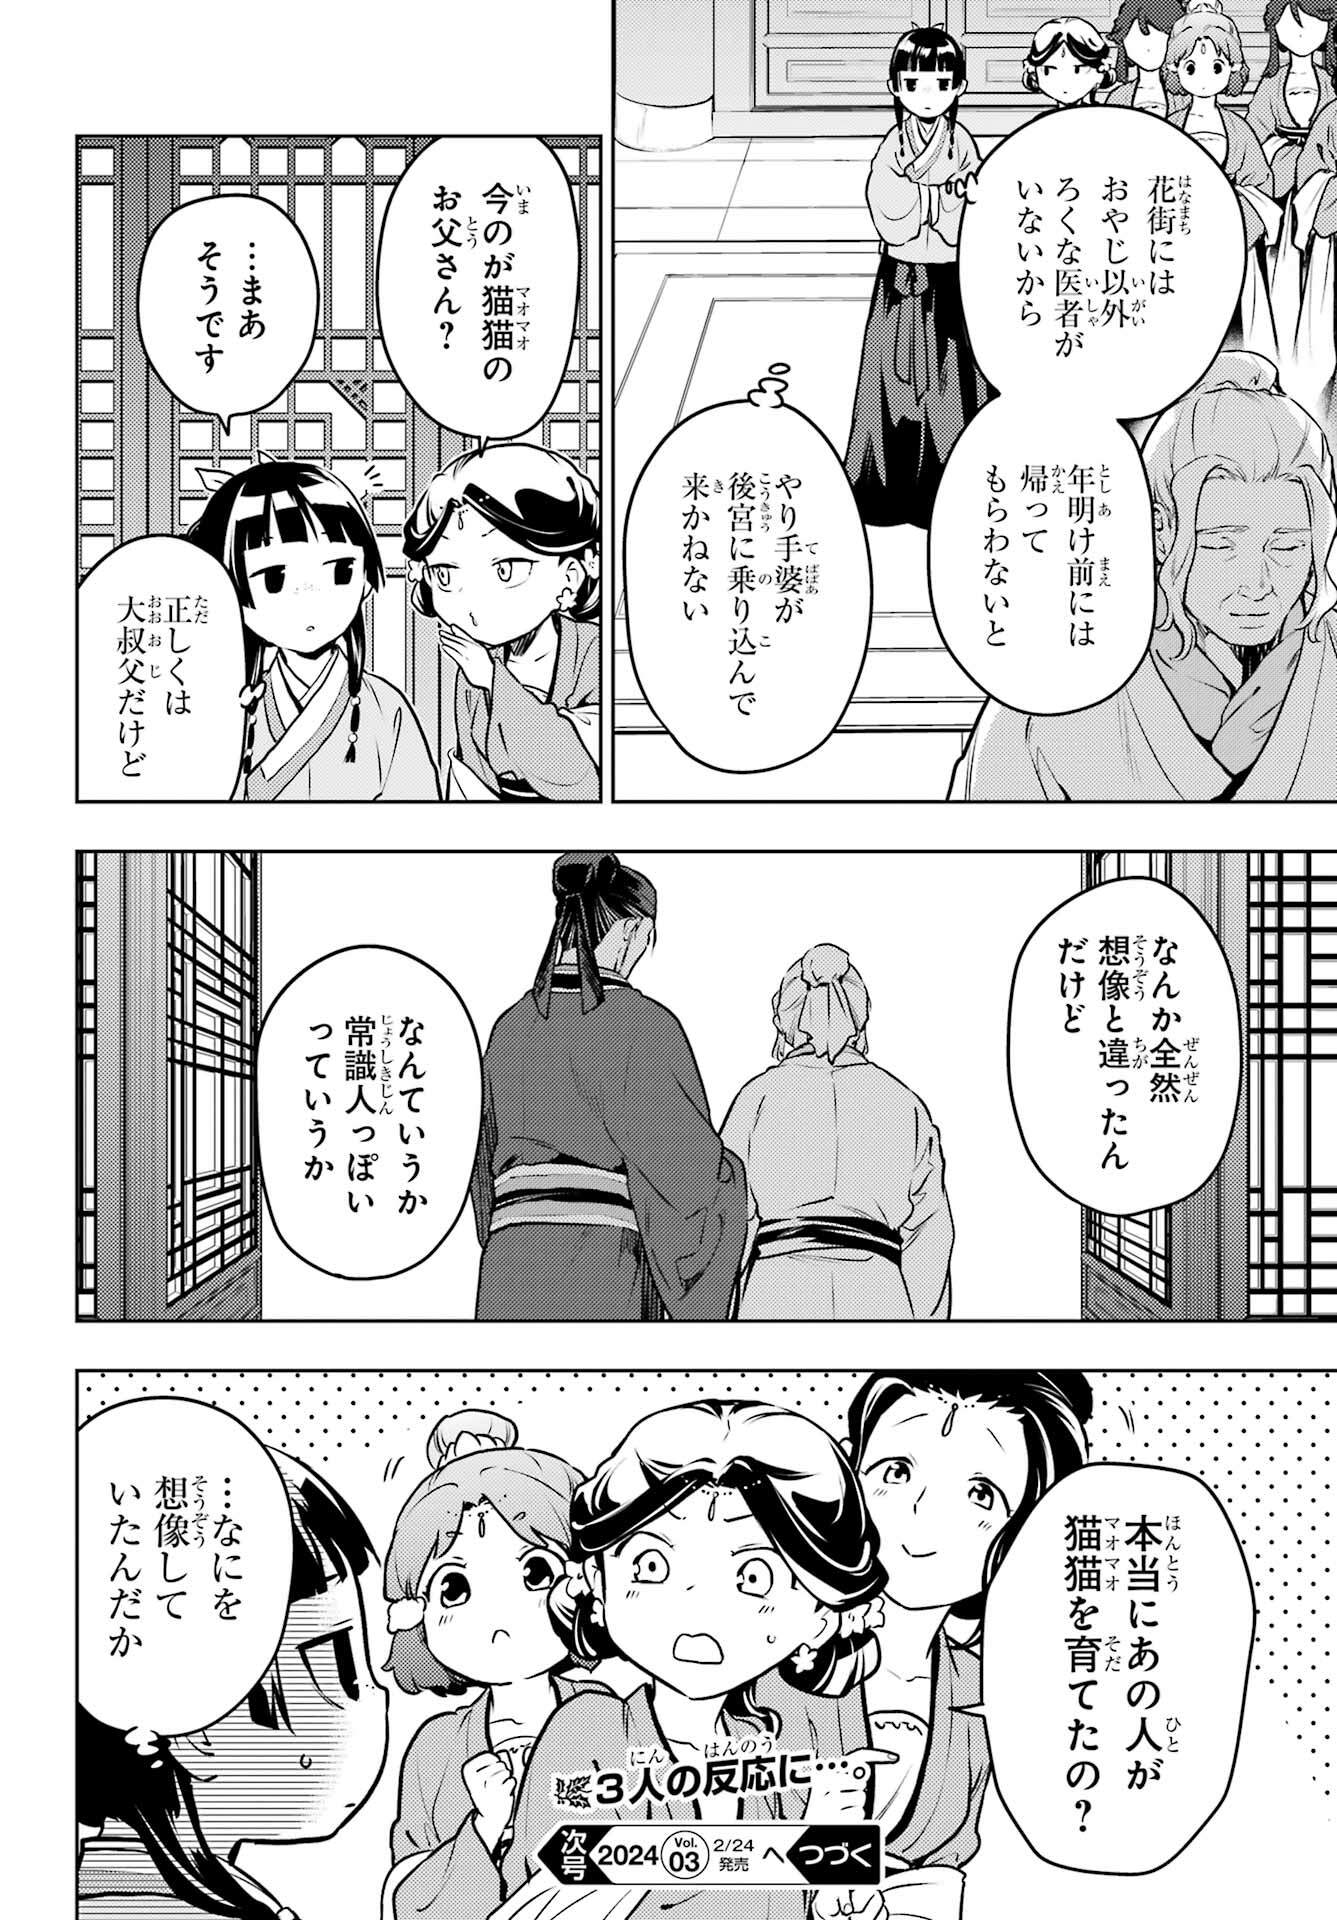 Kusuriya no Hitorigoto - Chapter 69.1 - Page 20